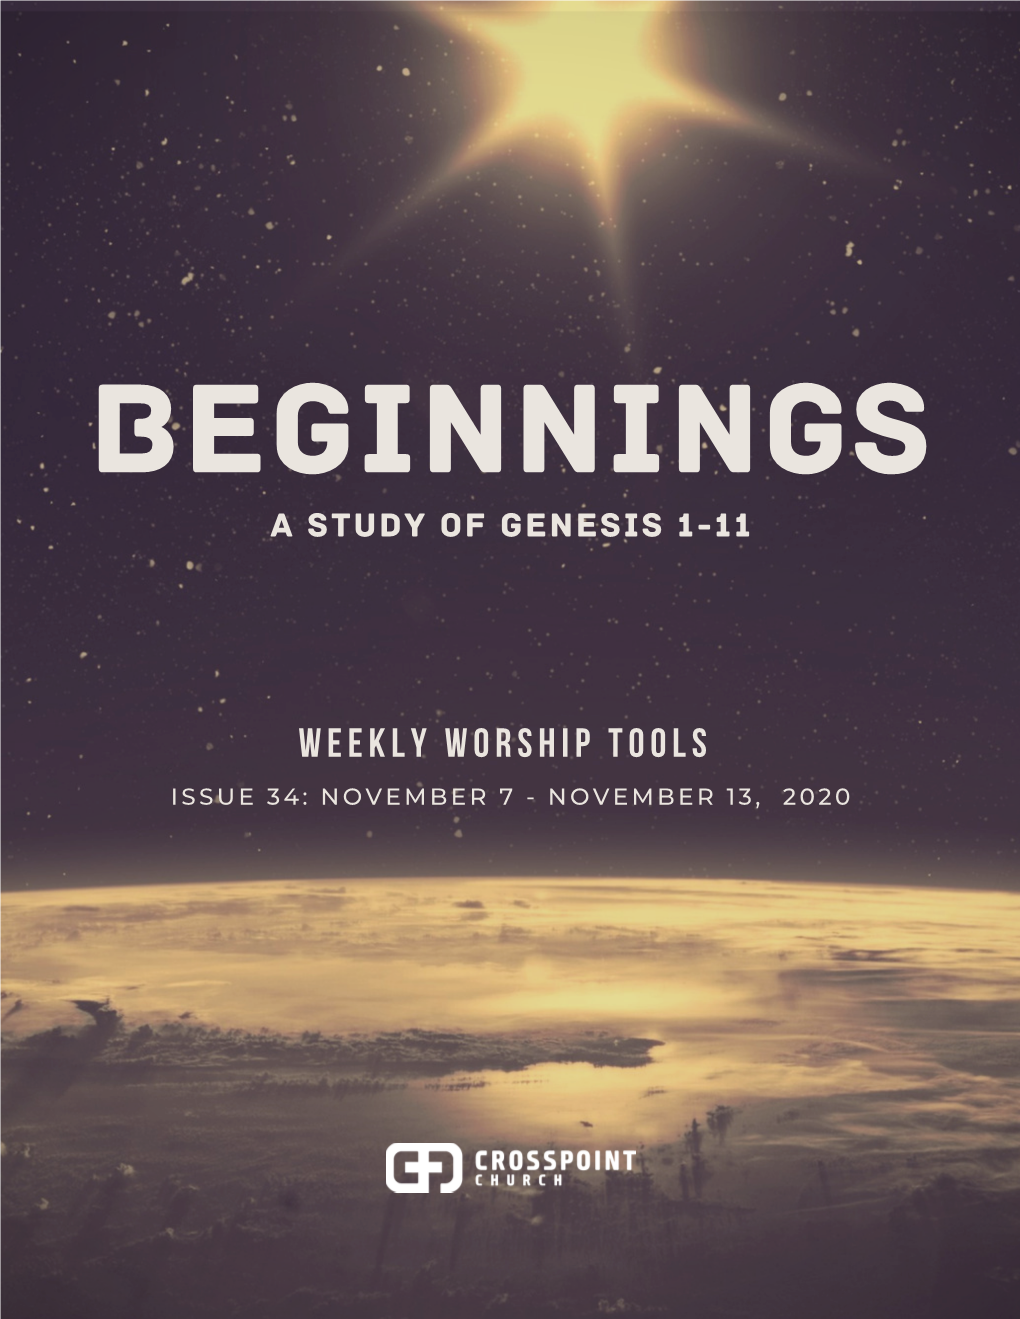 A Study of Genesis 1-11